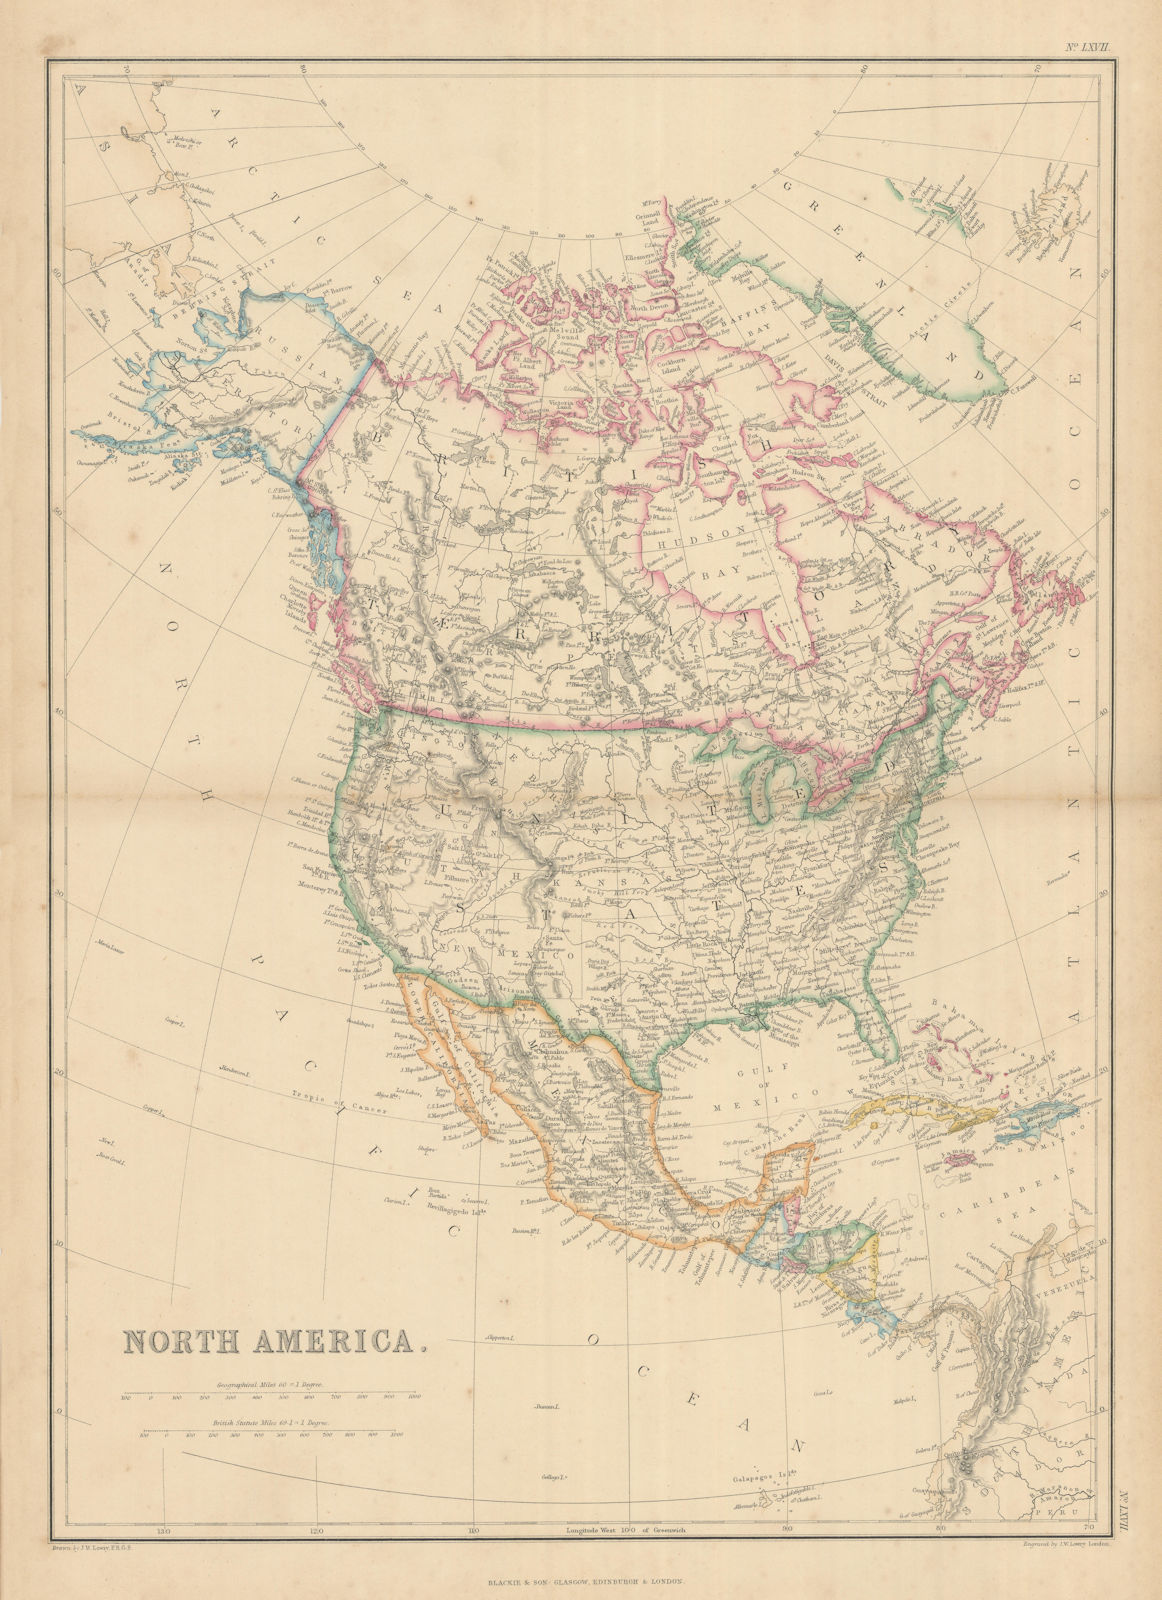 North America "Gadsden or Arizona". Early territorial boundaries. LOWRY 1860 map